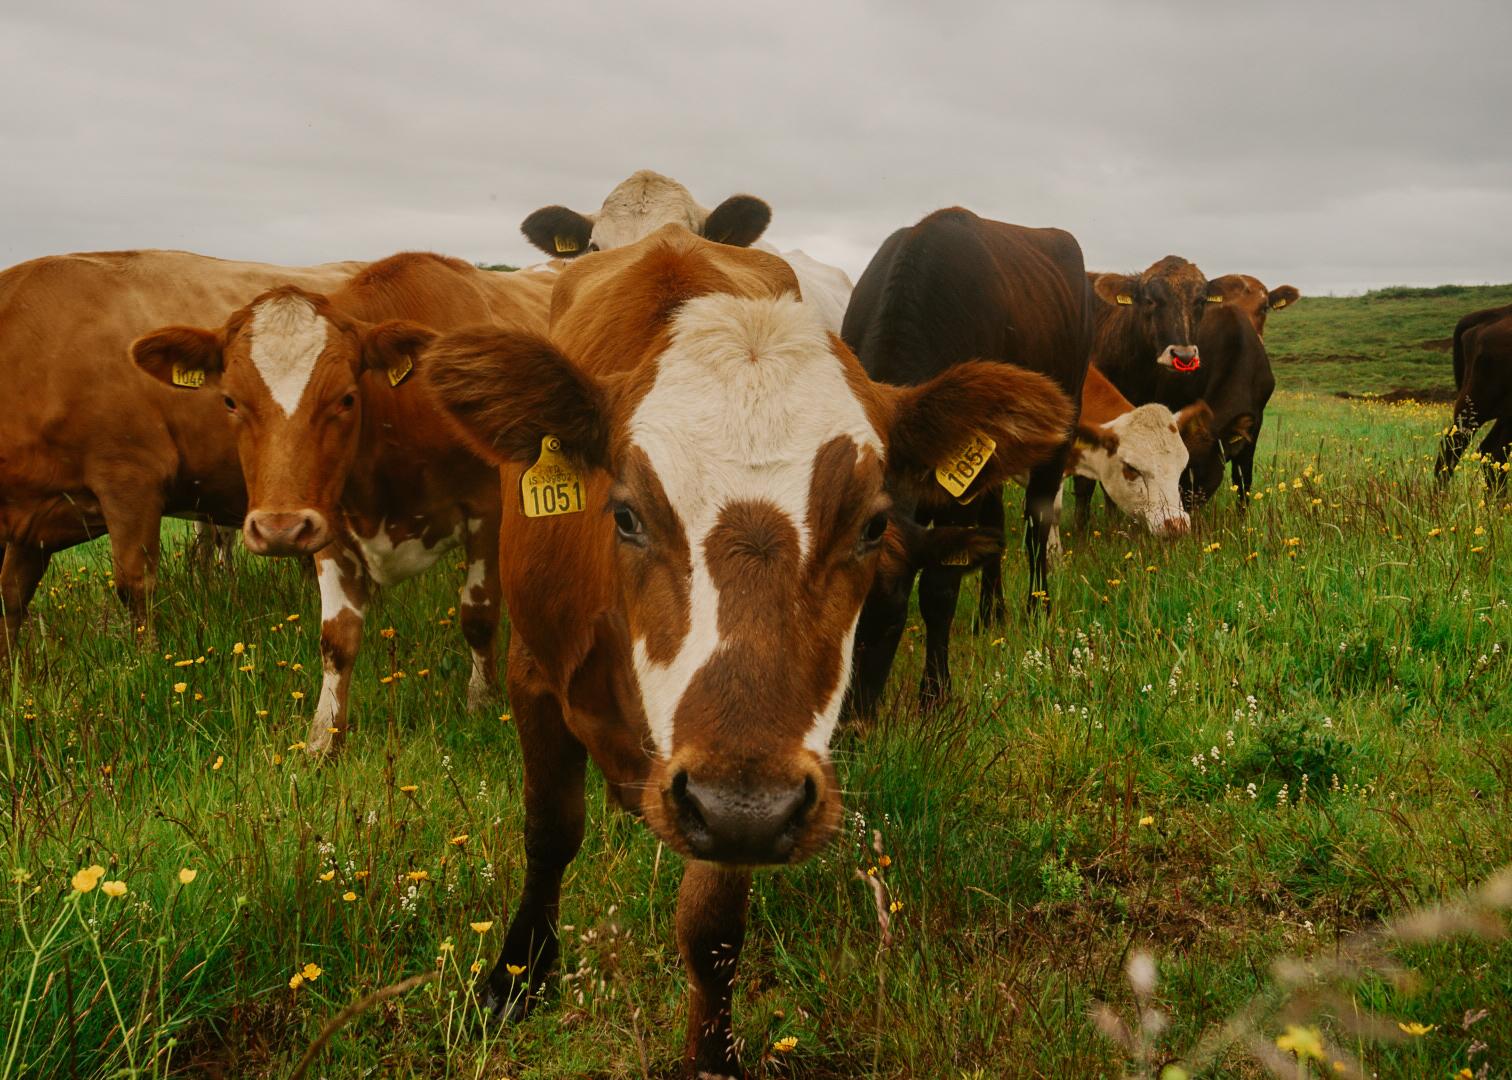 cows in a grassy field near Estidalur Farm in Iceland